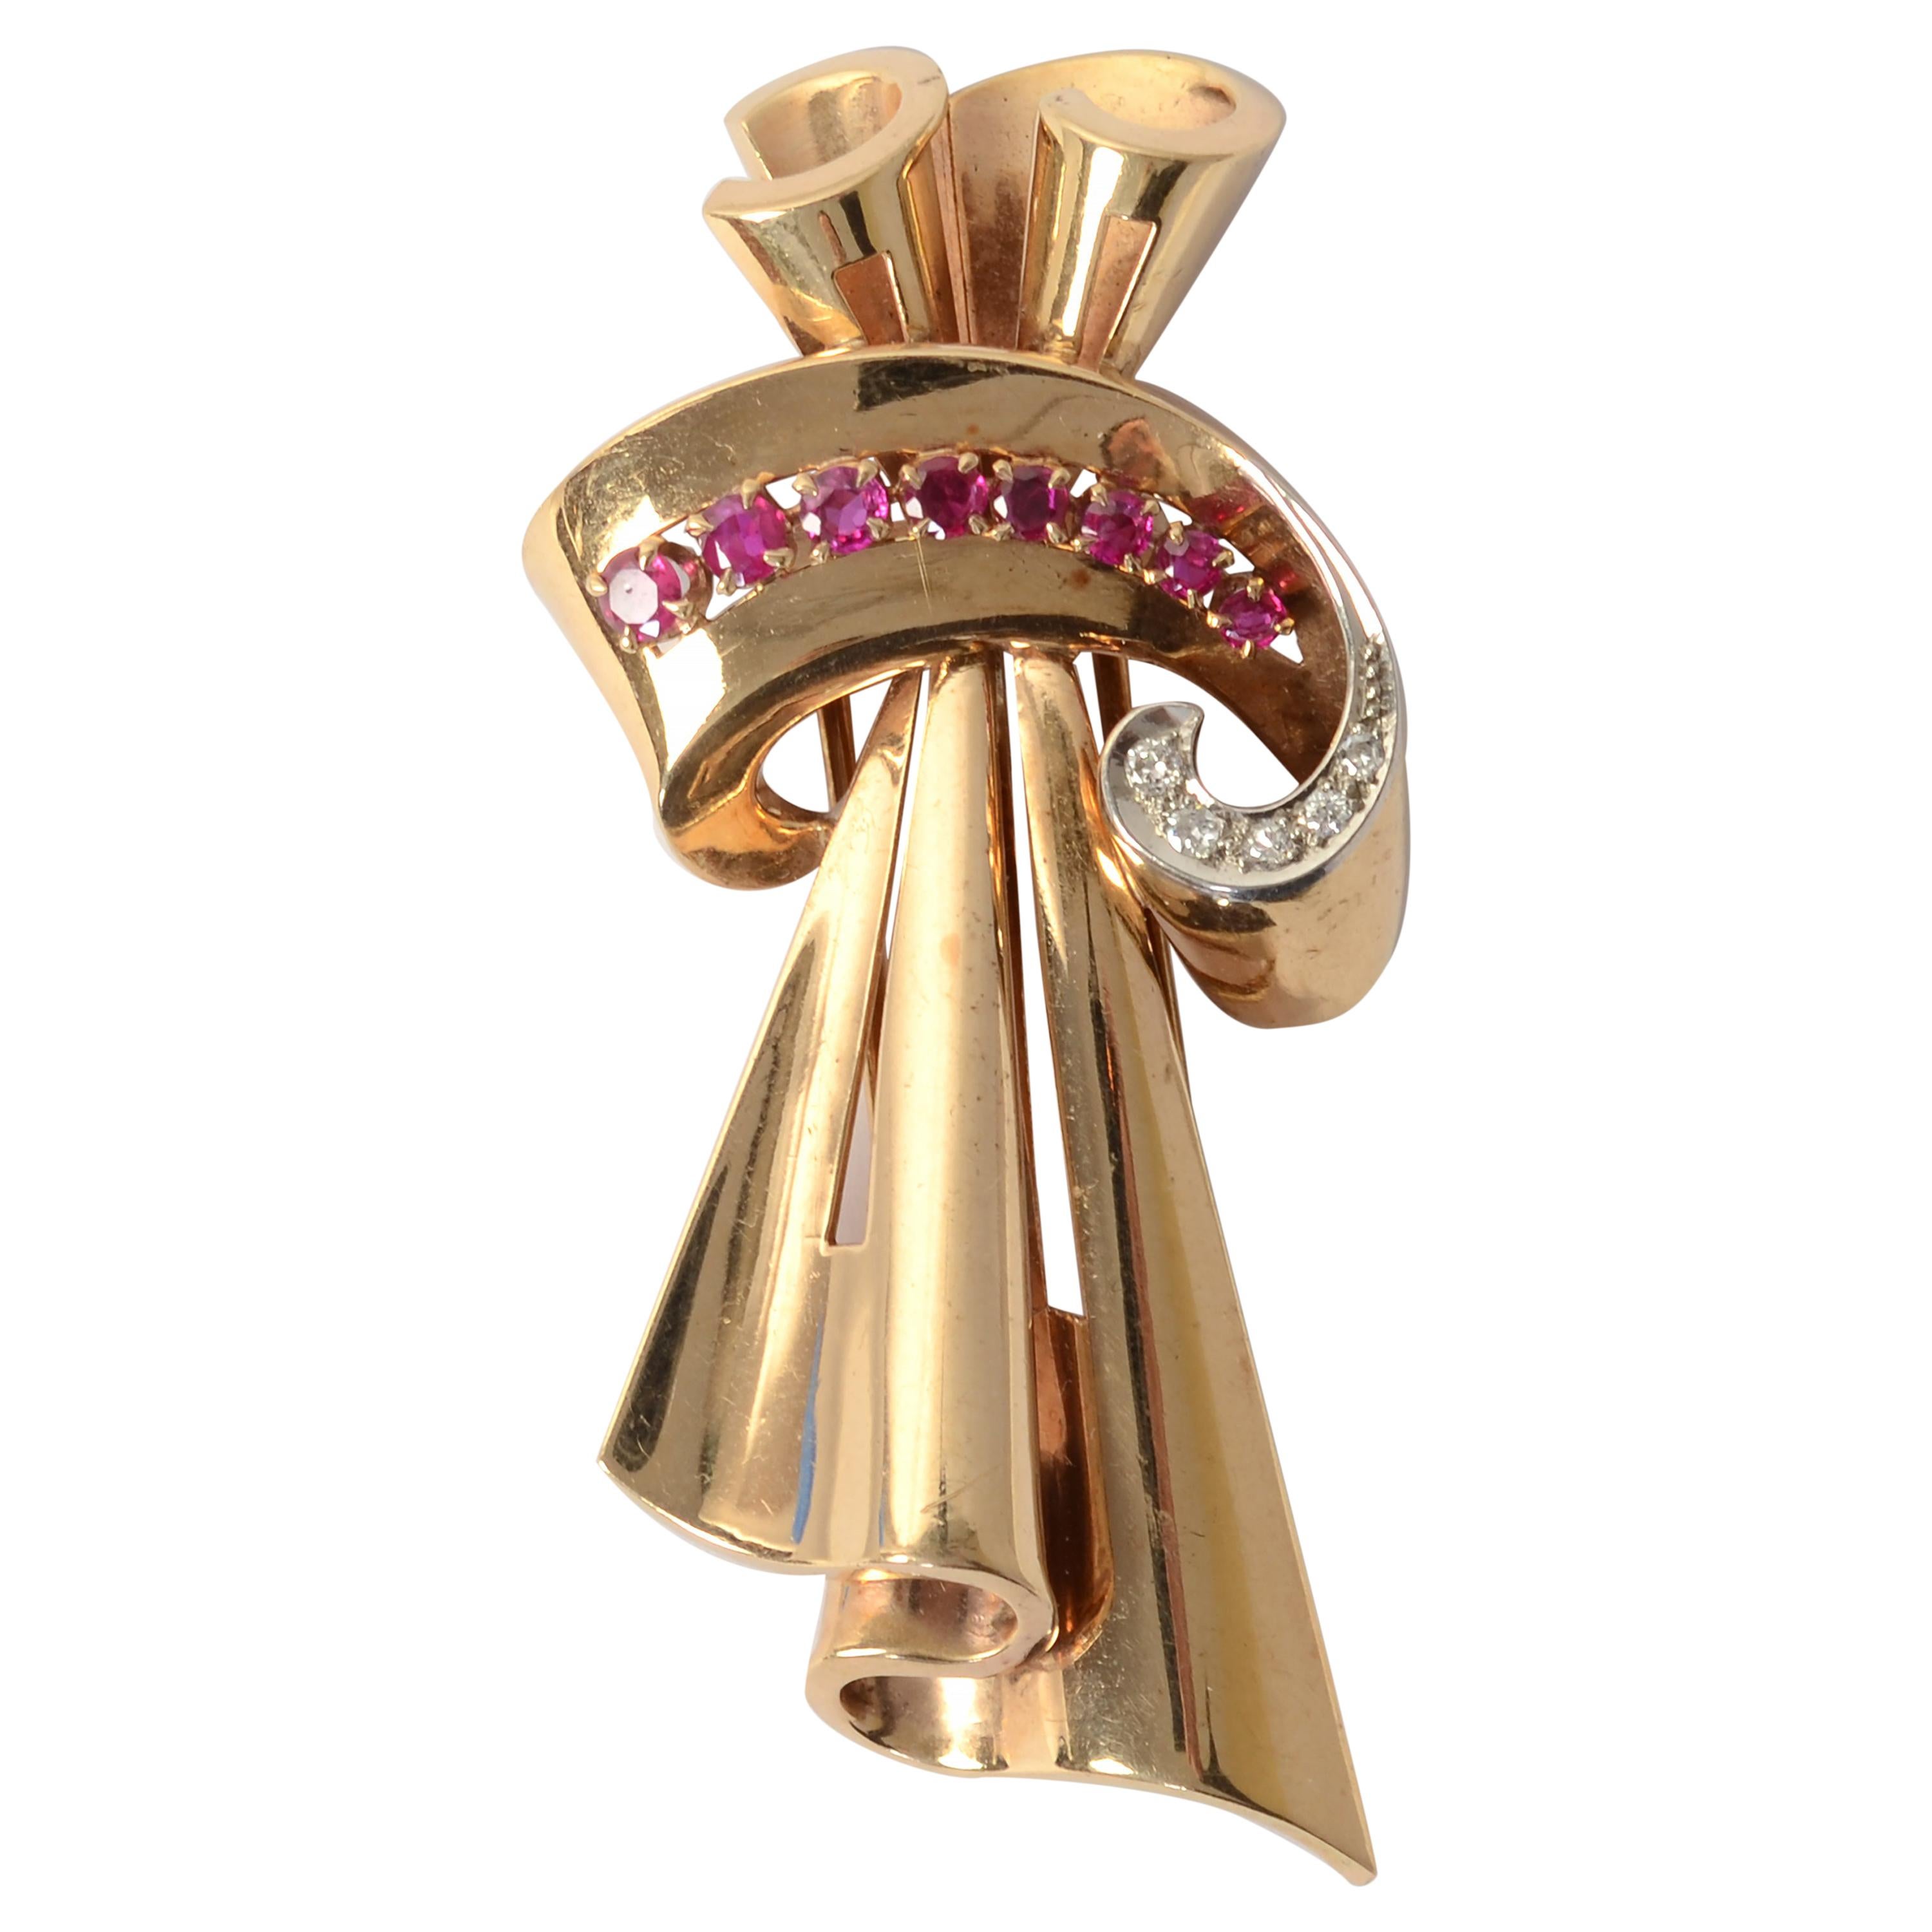 Tiffany & Co. Retro Brooch with Rubies and Diamonds